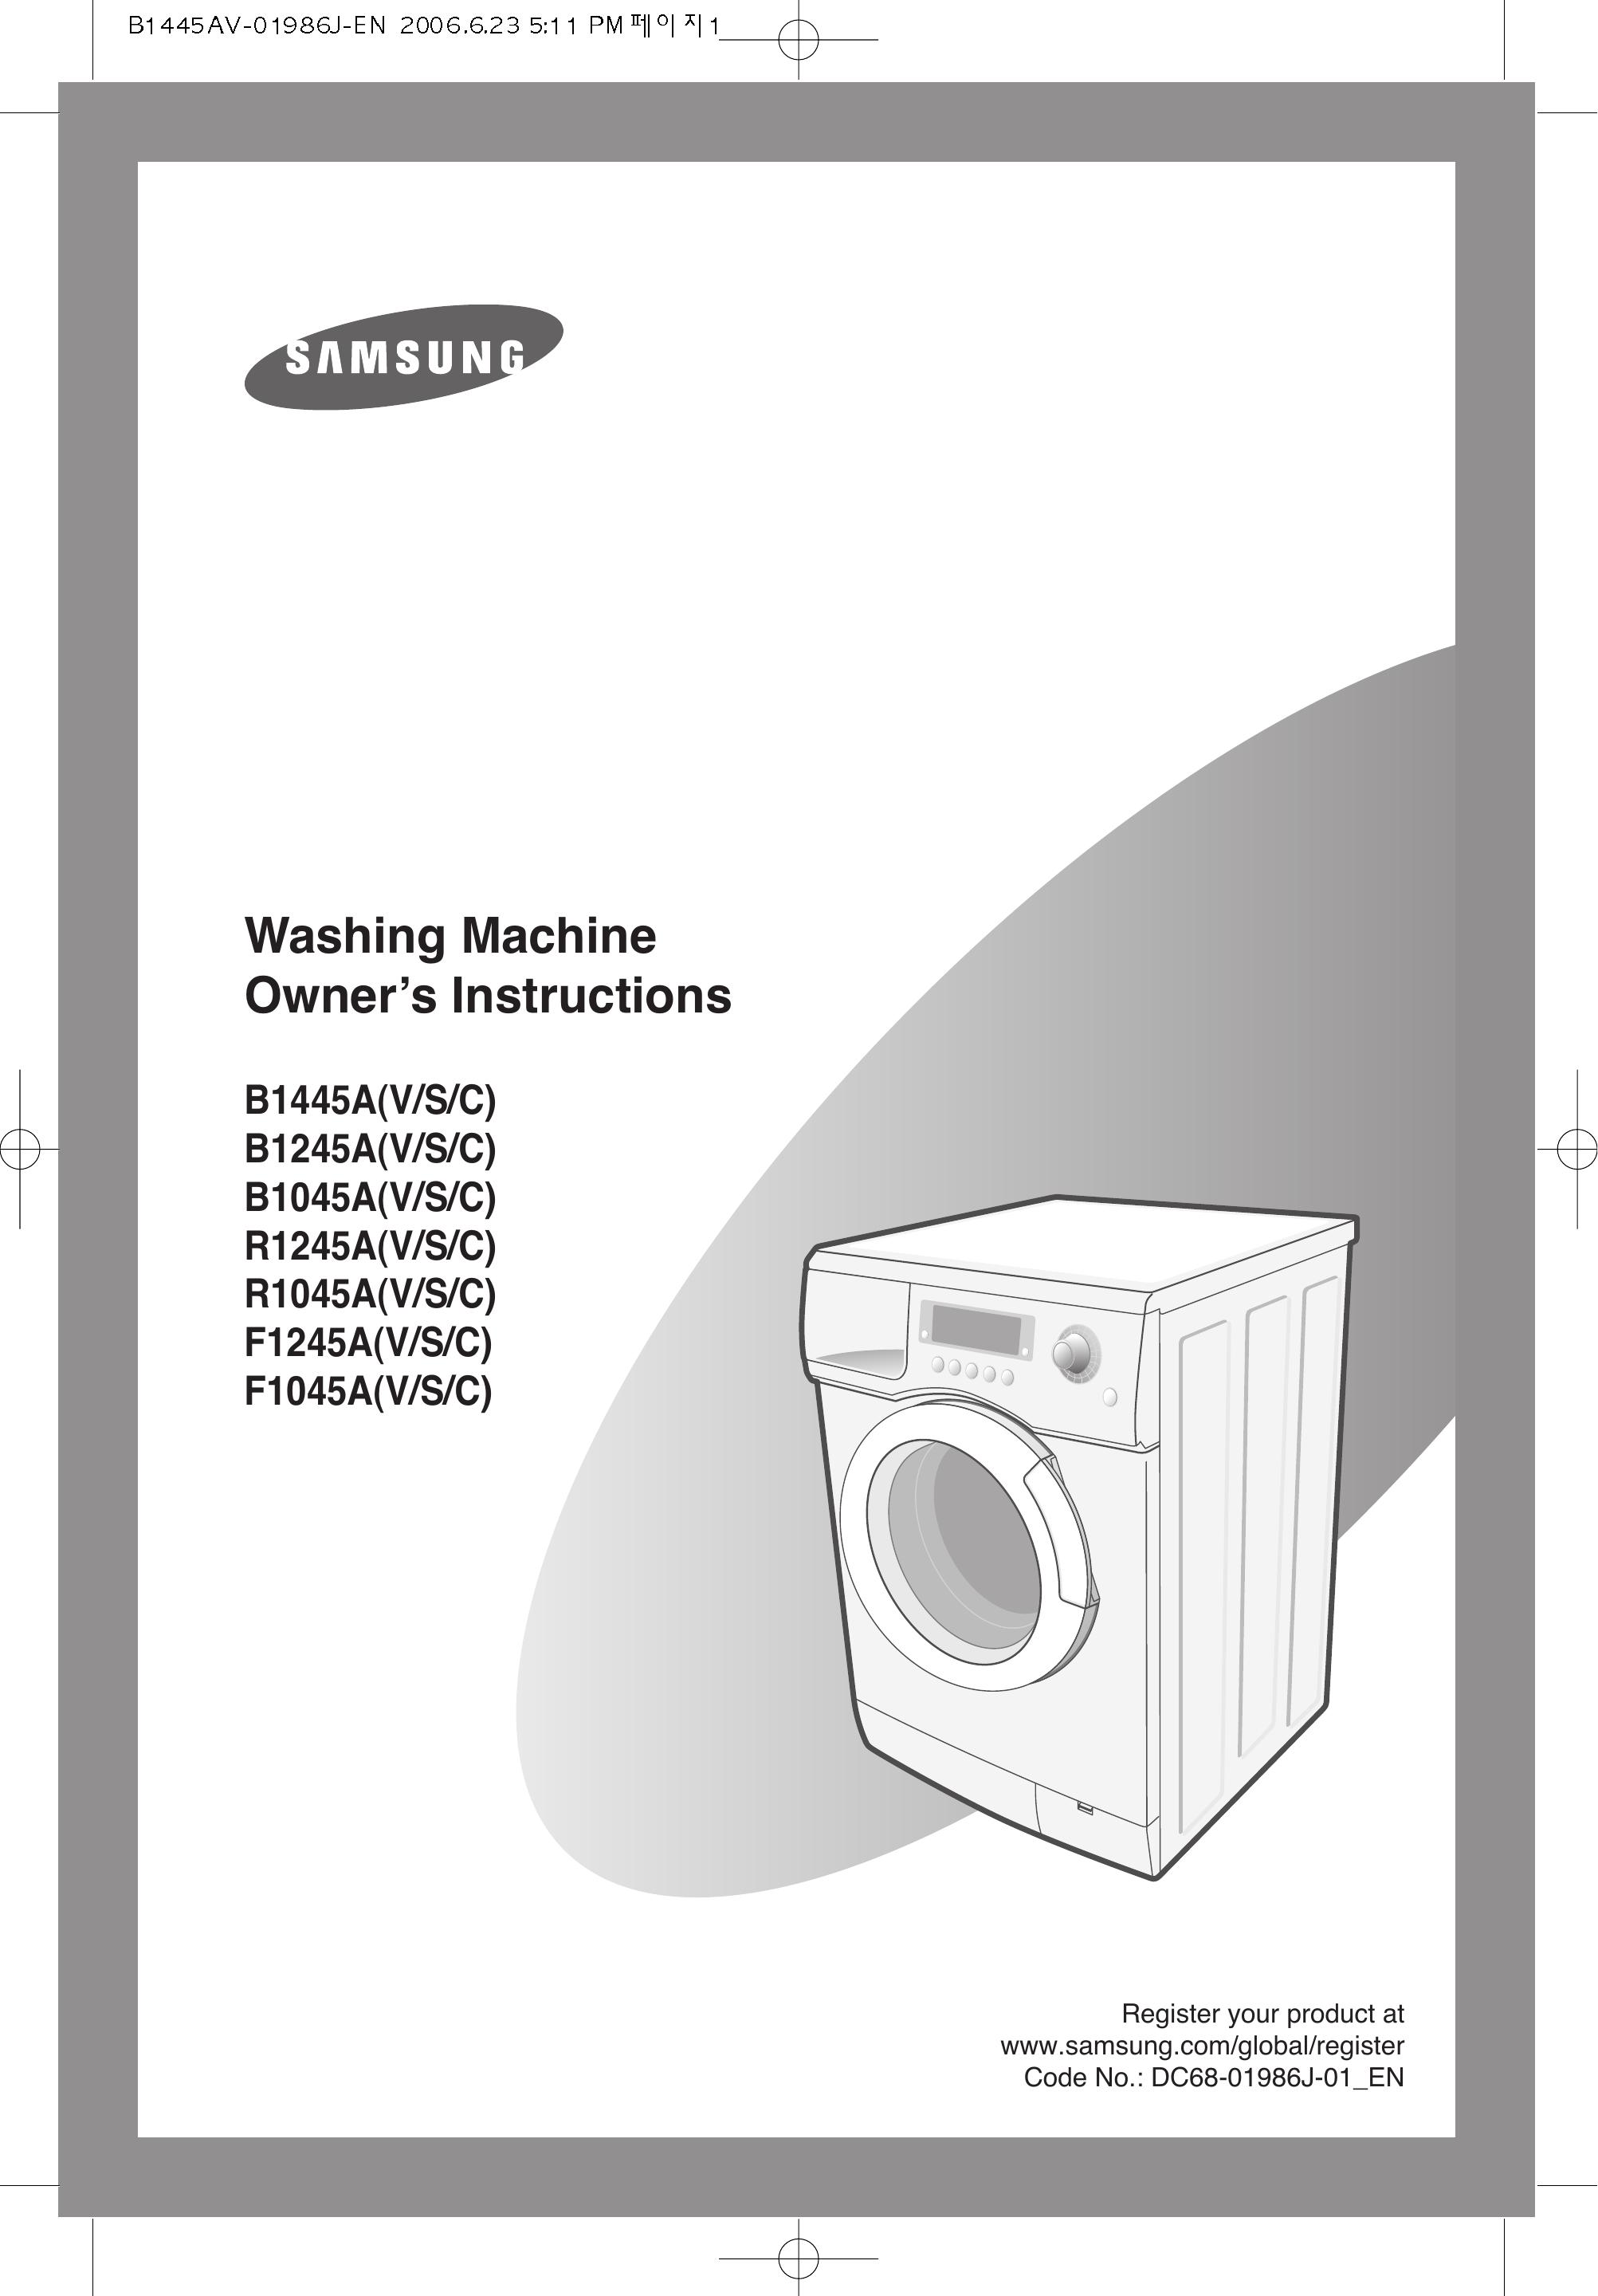 Samsung F1245A(V/S/C) Washer User Manual